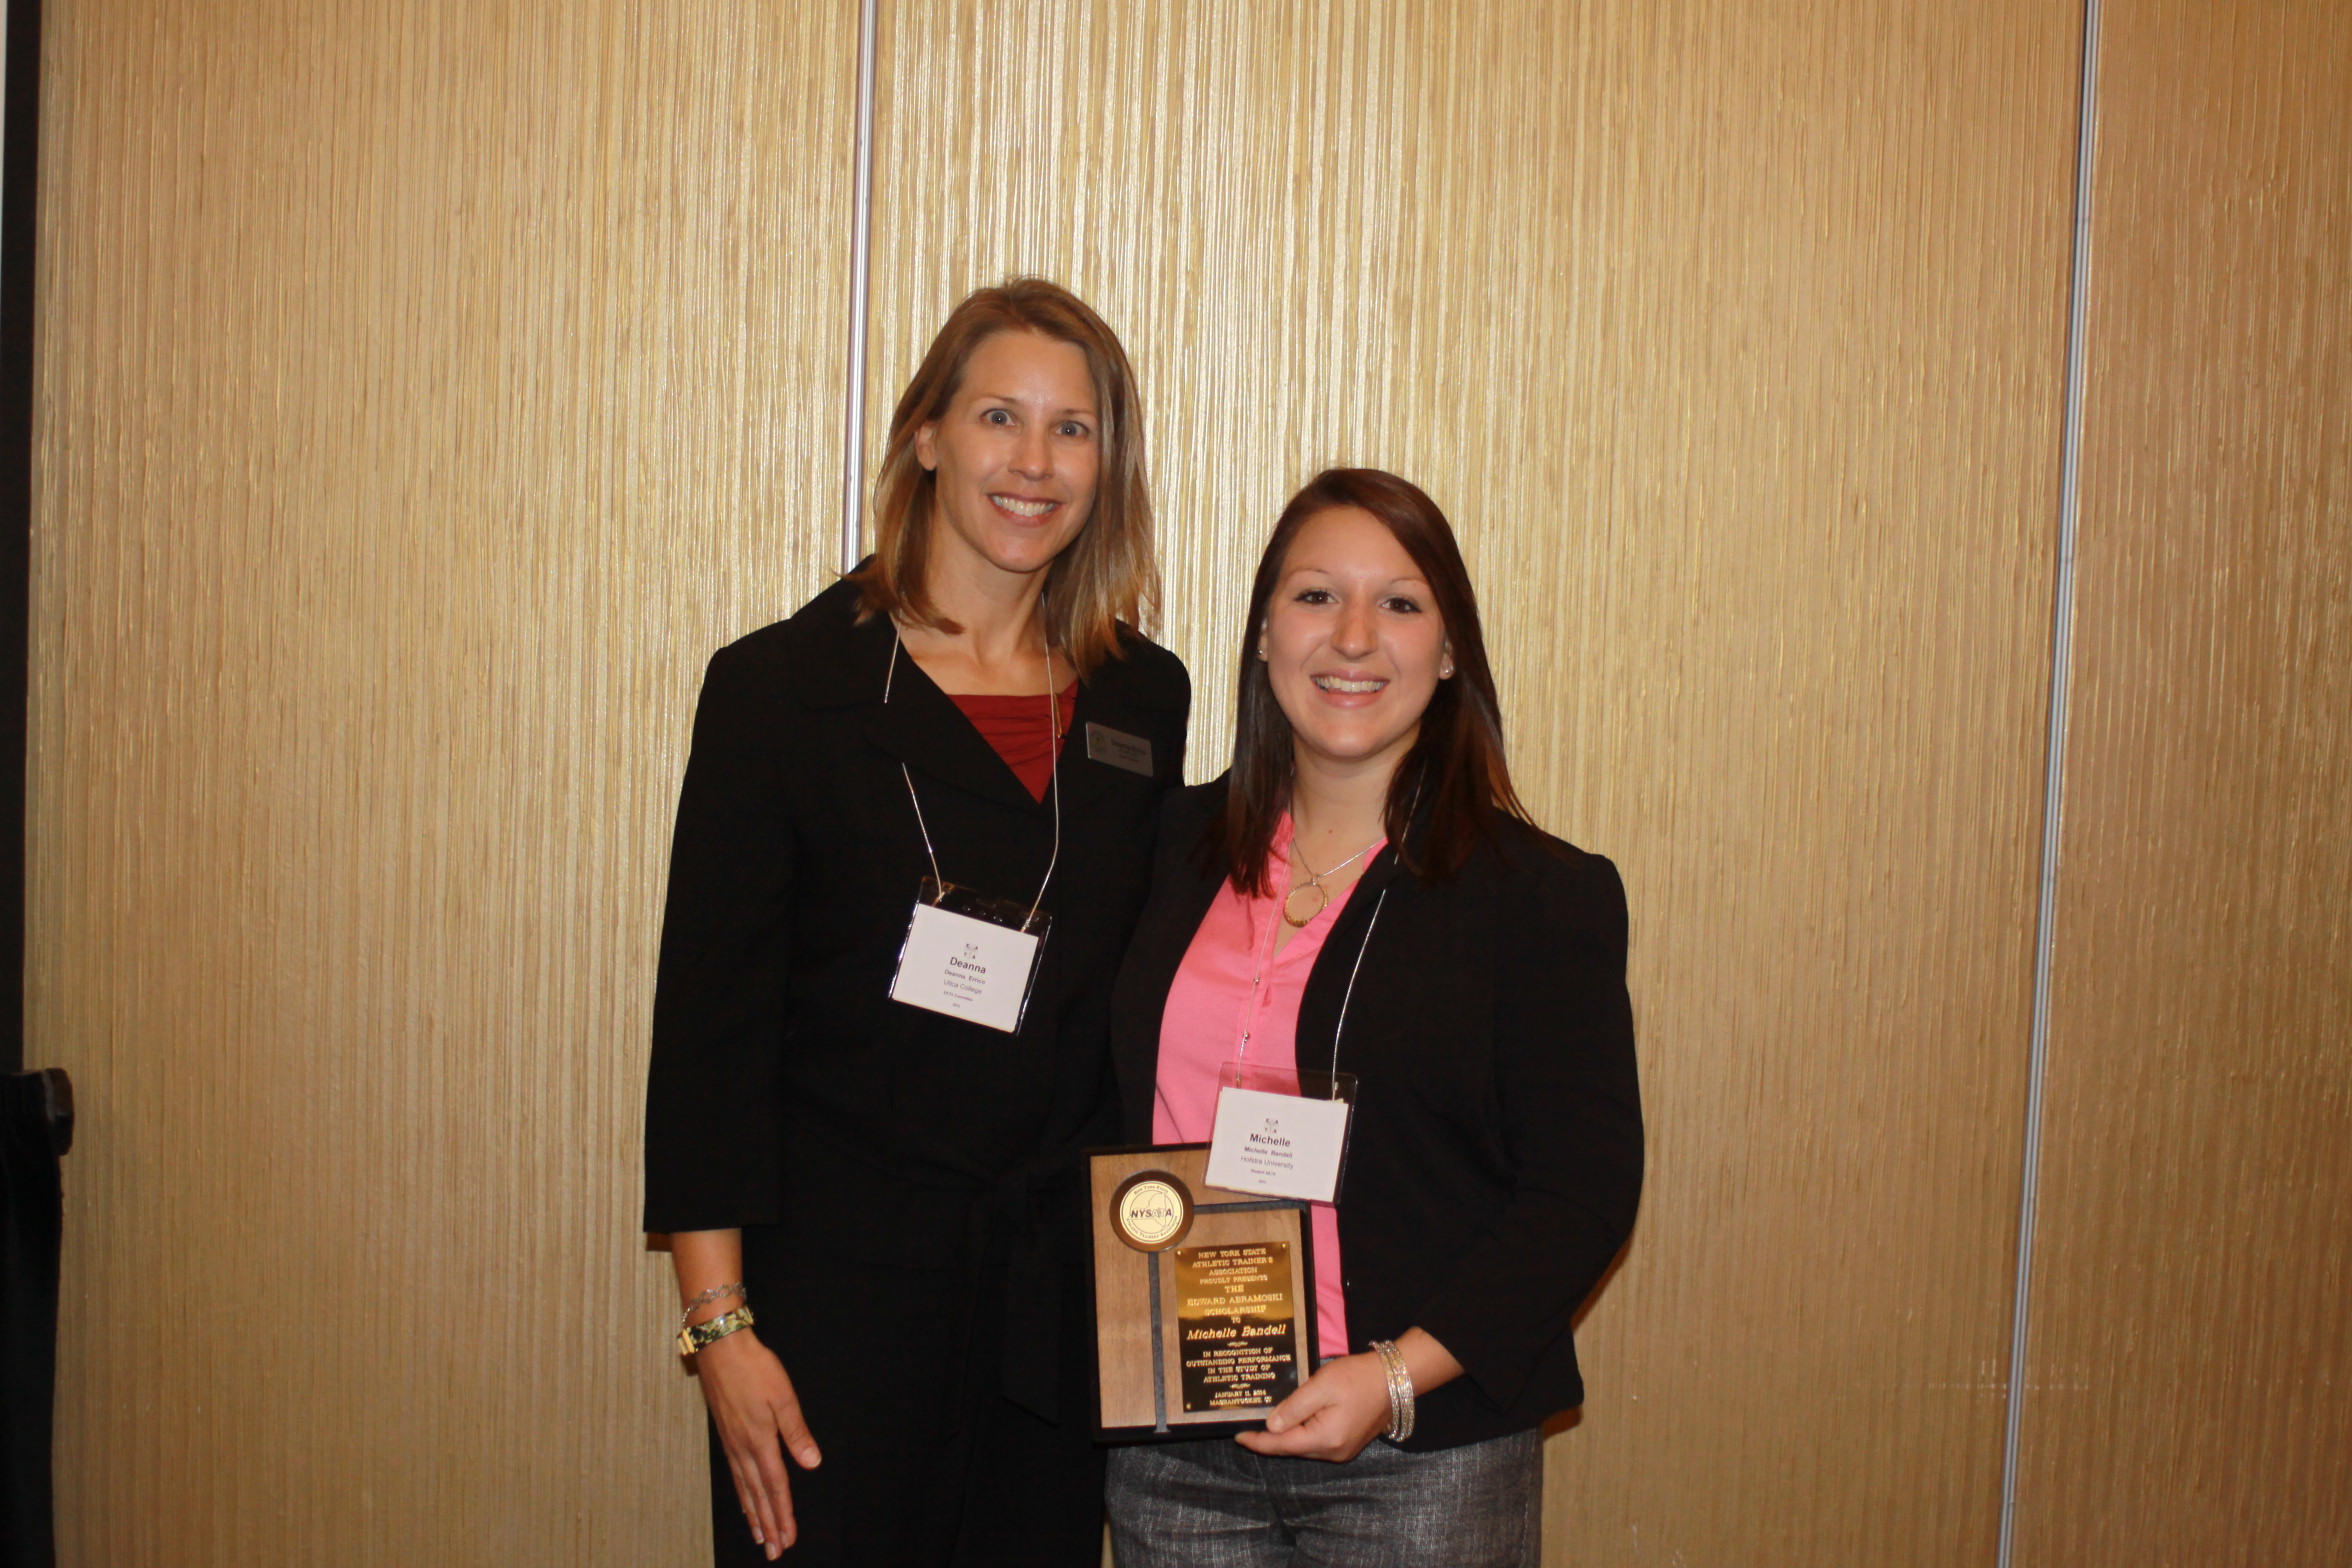 Michelle Bandell of Hofstra University (right) was awarded the 2014 Ed Abramoski Scholarship.